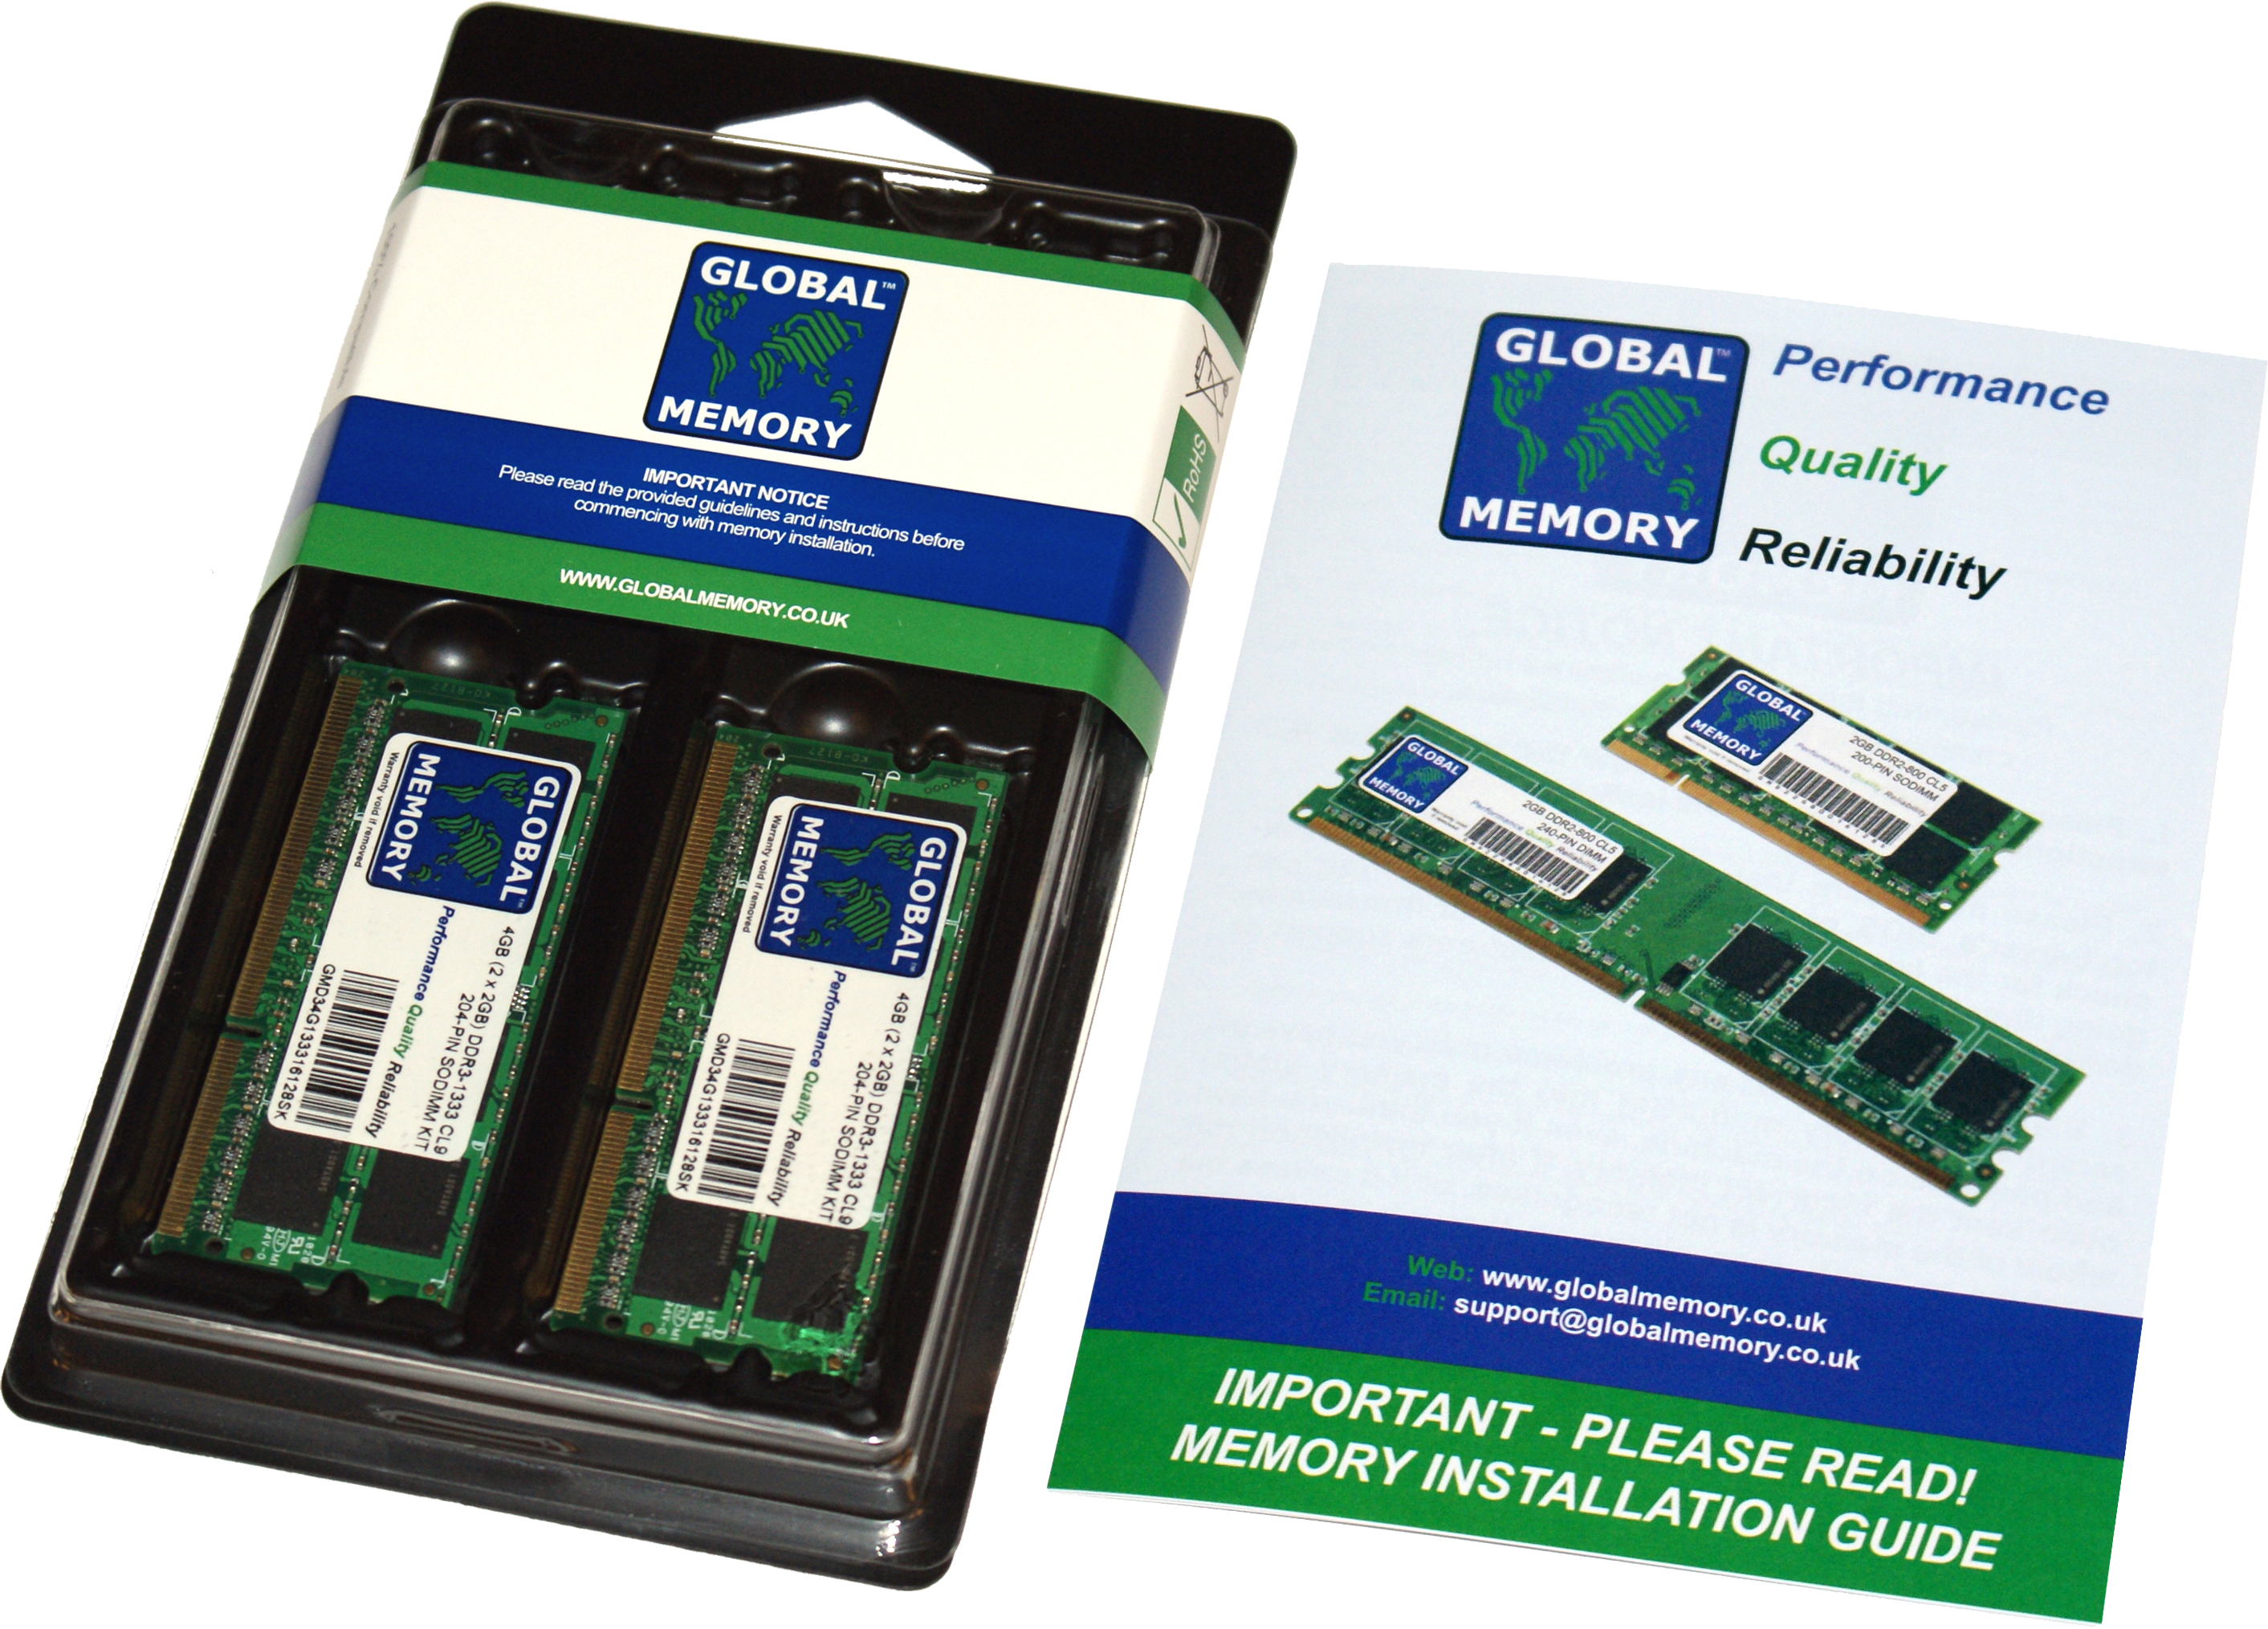 32GB (2 x 16GB) DDR4 2133MHz PC4-17000 260-PIN SODIMM MEMORY RAM KIT FOR LAPTOPS/NOTEBOOKS